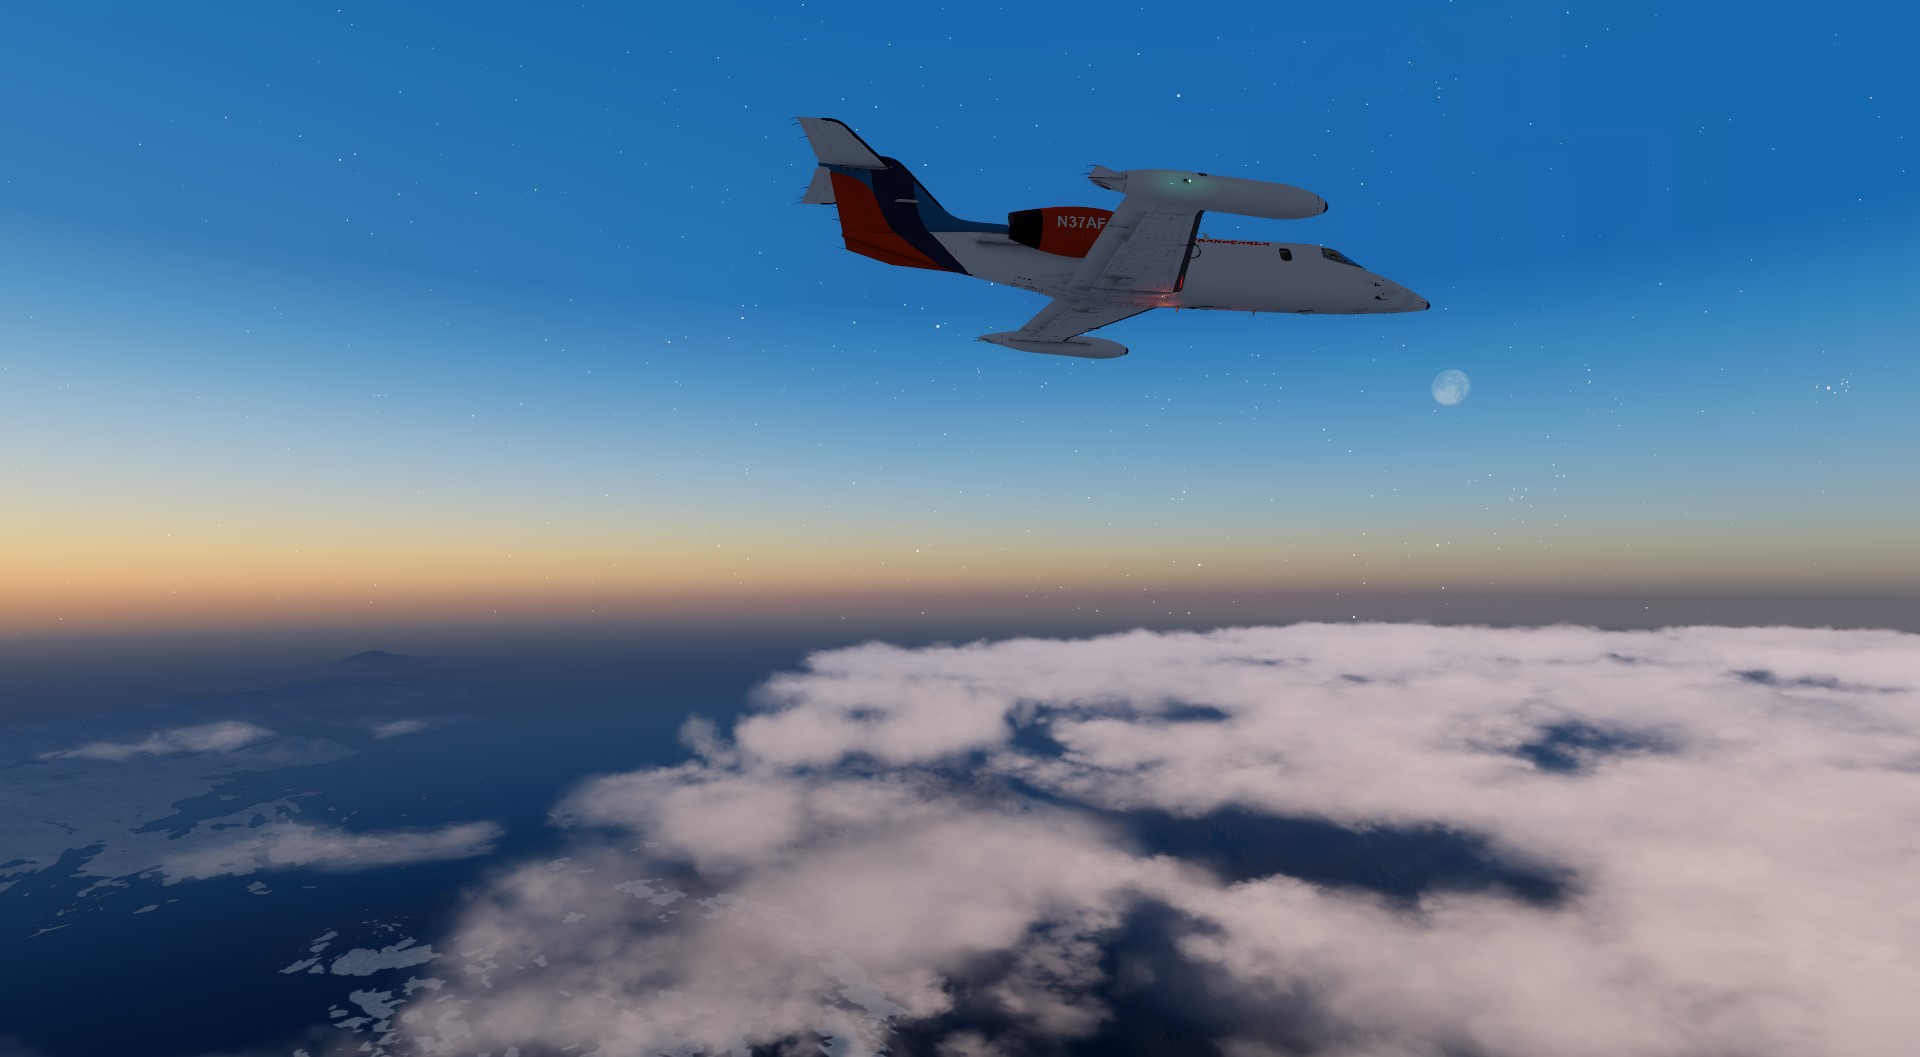 Flysimware – Learjet 35A 评测与冰岛送货之旅-7273 